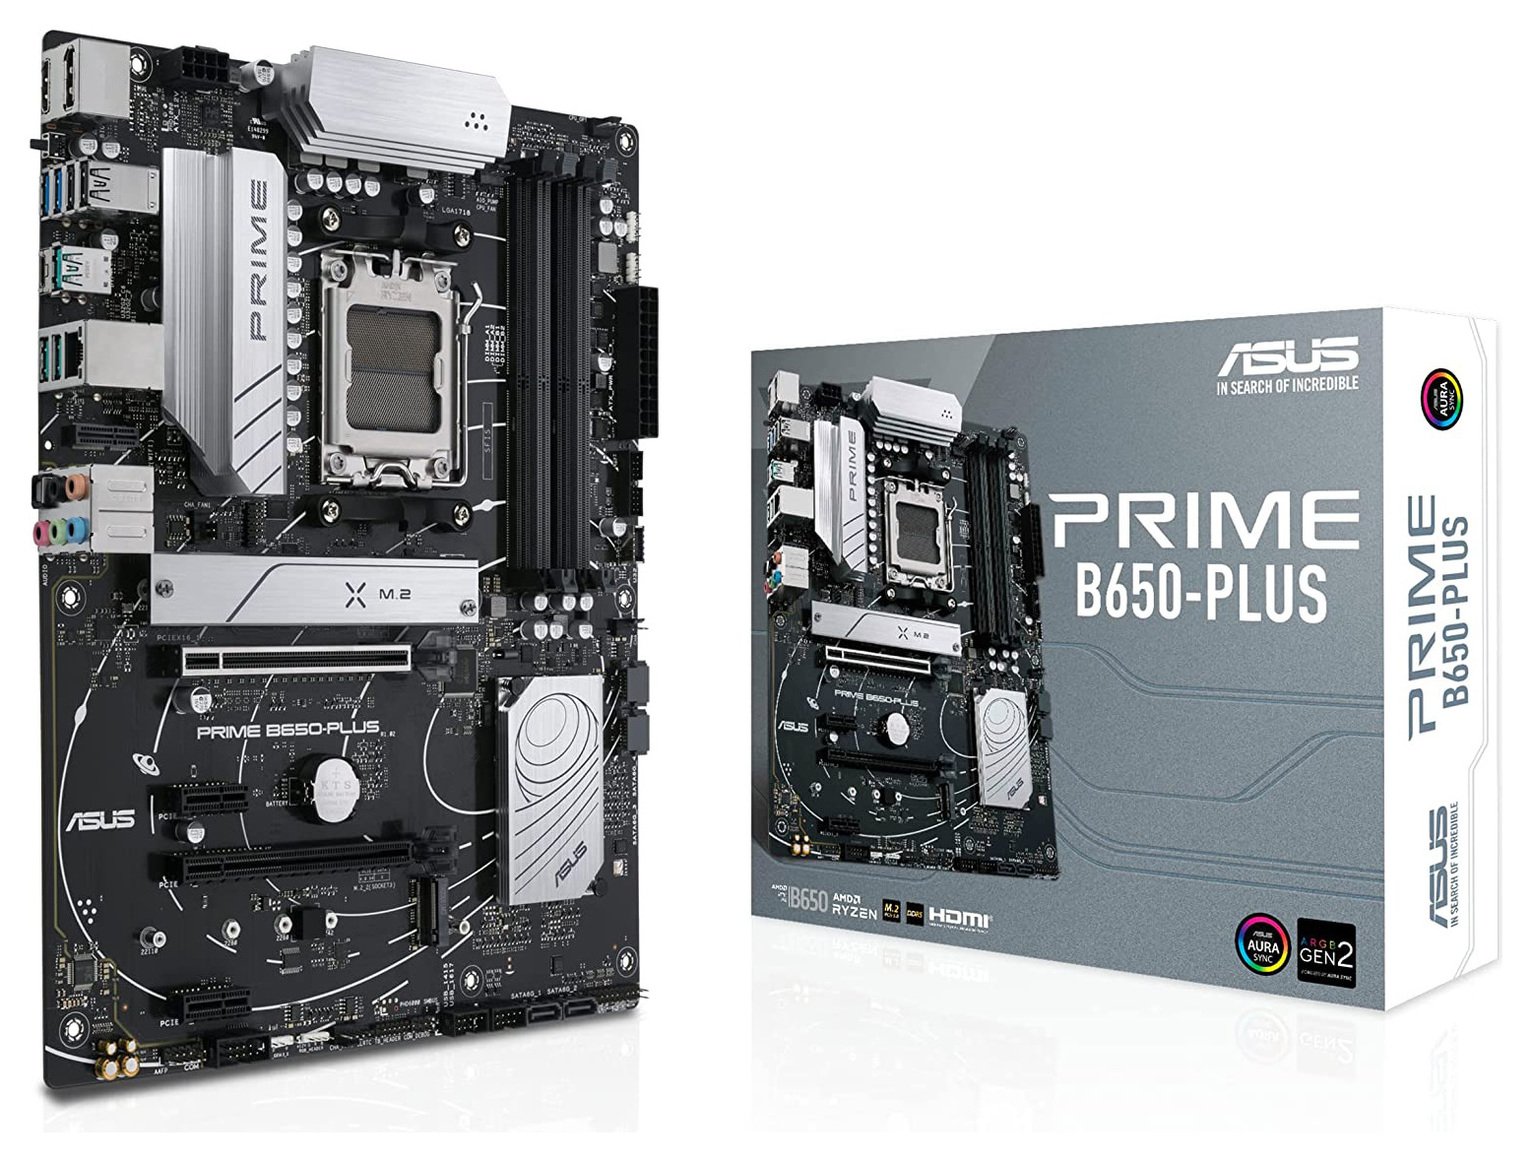 ASUS Prime B650 Plus WiFi AMD Ryzen Motherboard